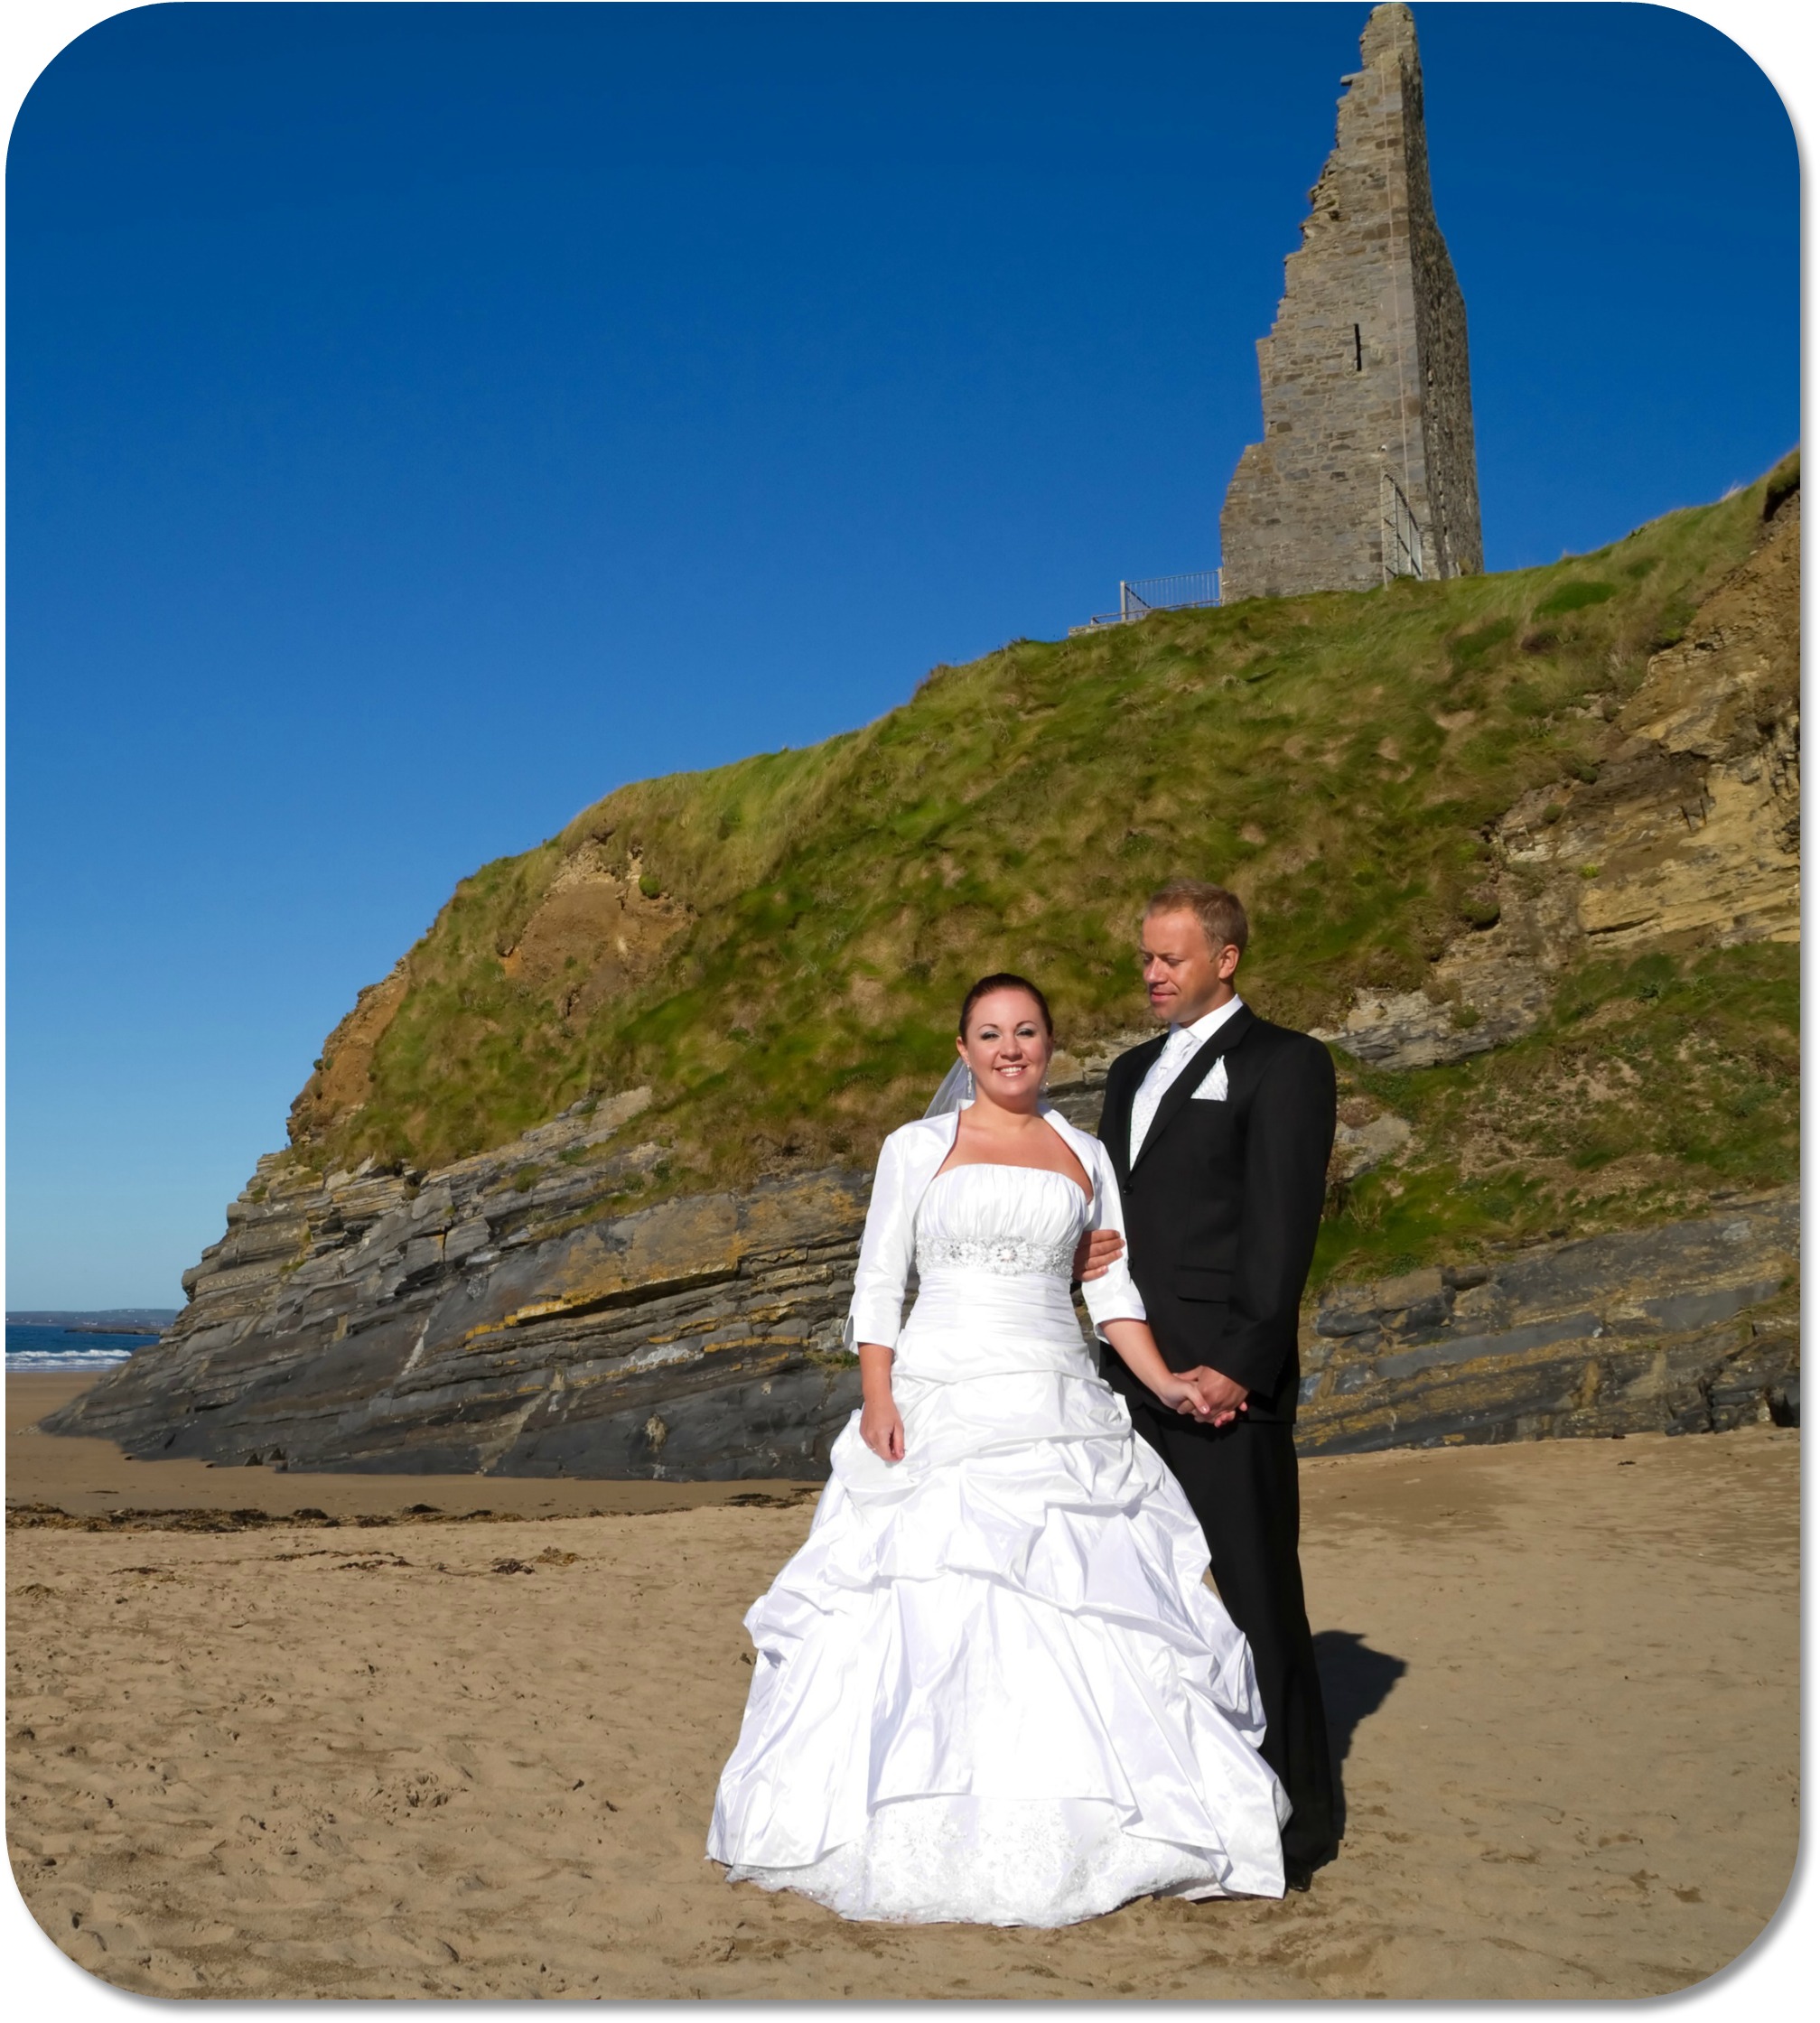 Irish Wedding Traditions - Bride and Groom on the Beach.